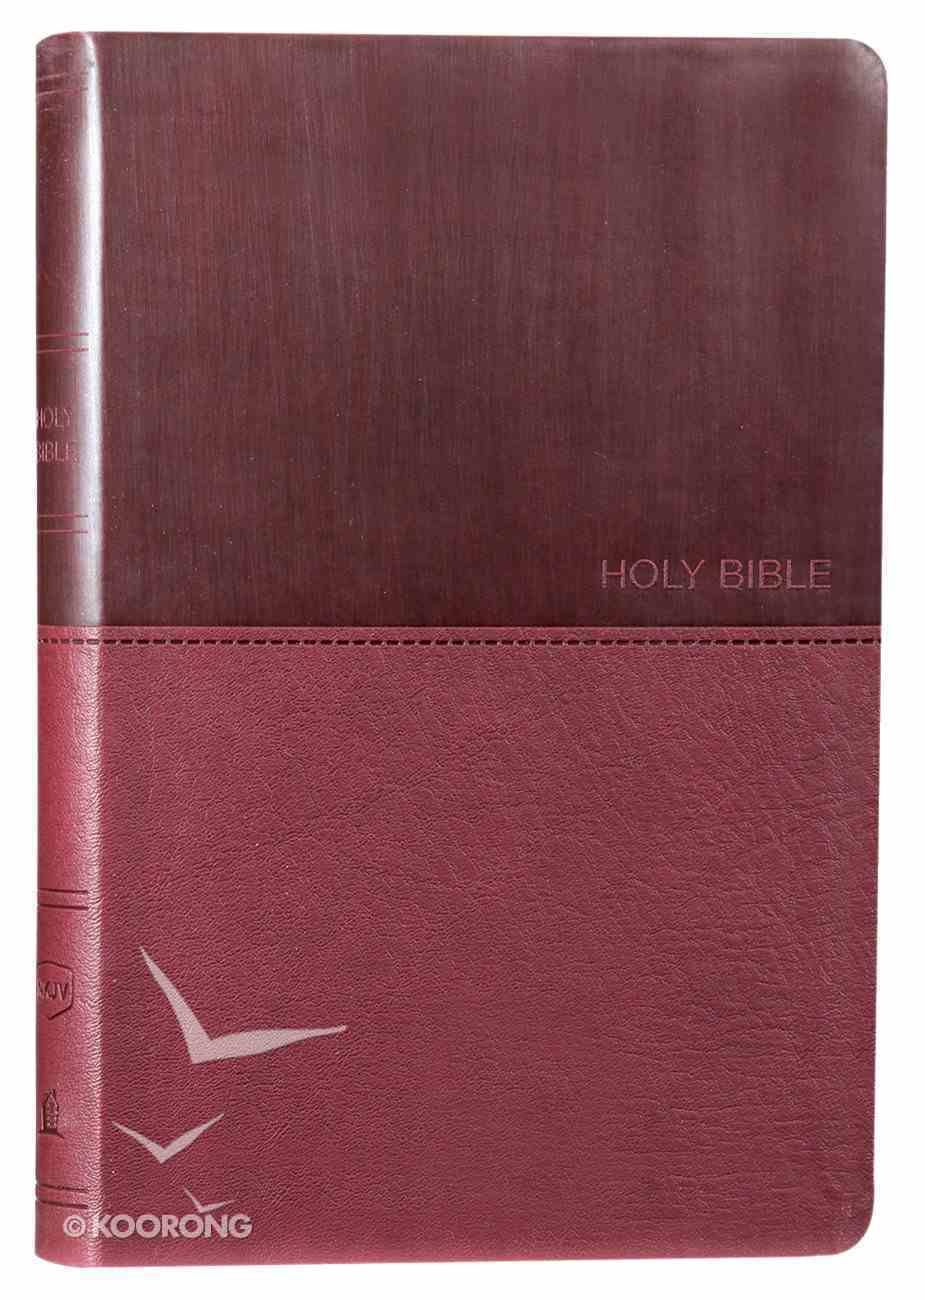 NKJV Value Thinline Bible Large Print Burgundy (Red Letter Edition) Premium Imitation Leather